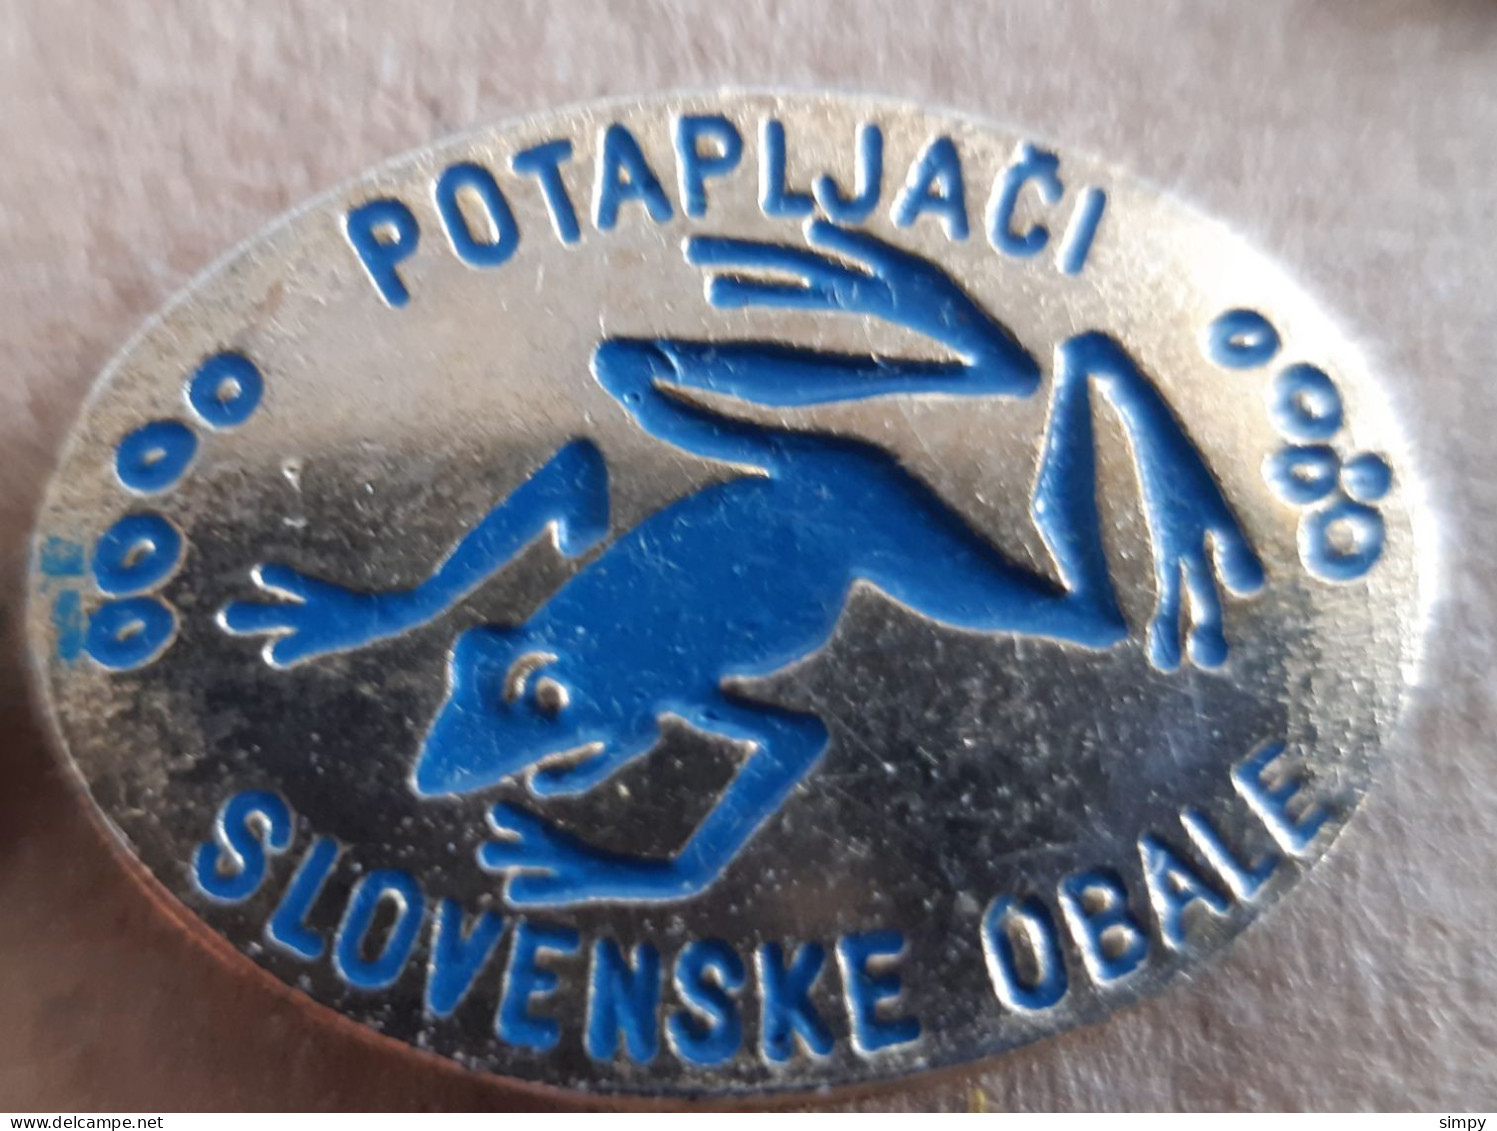 Scuba Diving Club Potapljaci Slovenske Obale Underwater Diving Frog Slovenia Pins - Schwimmen